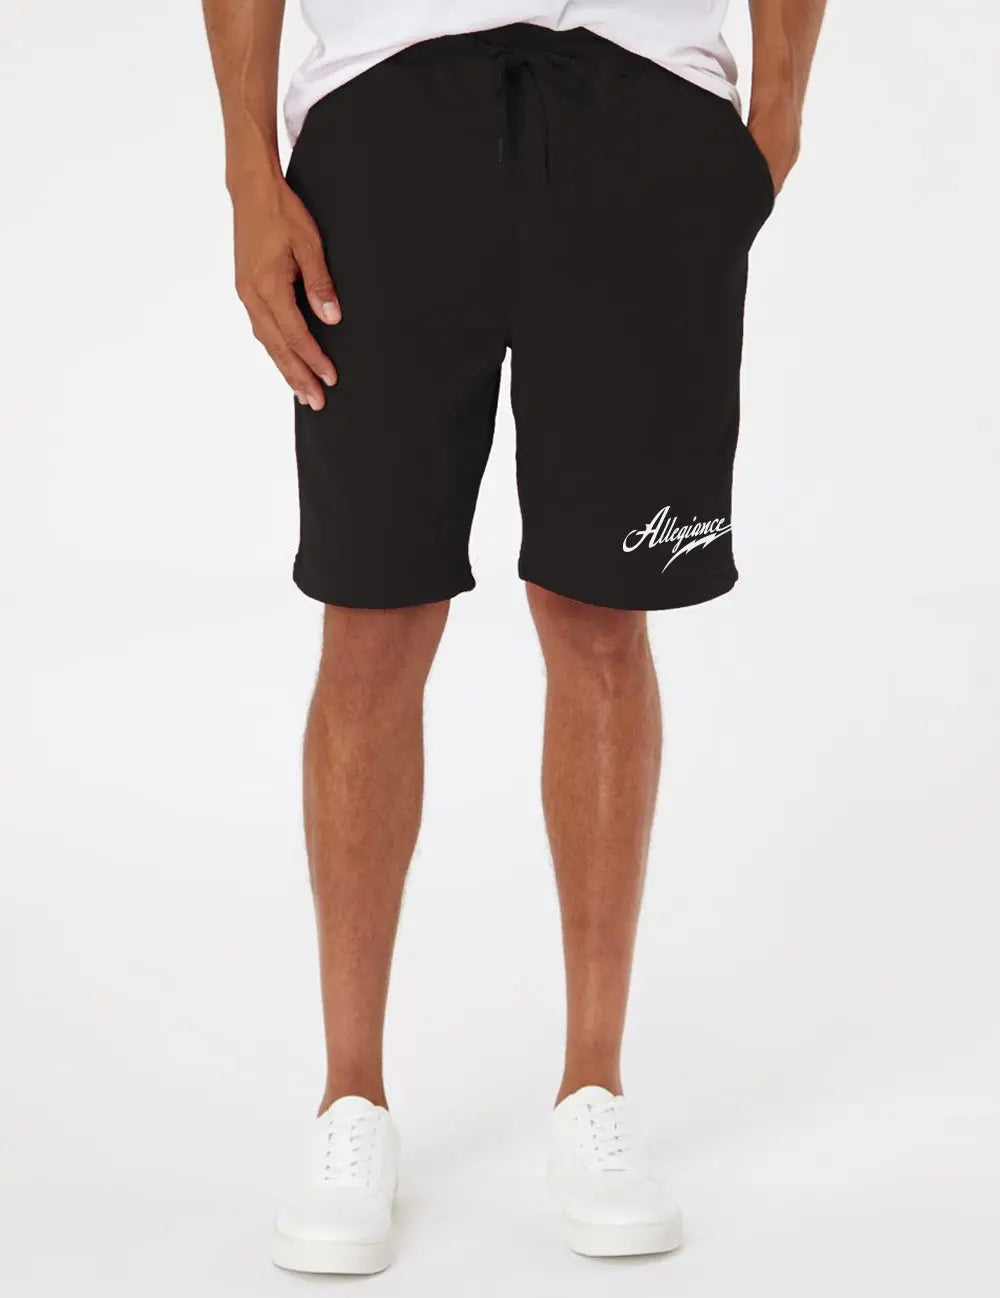 Classic Sweat Shorts - Allegiance Clothing